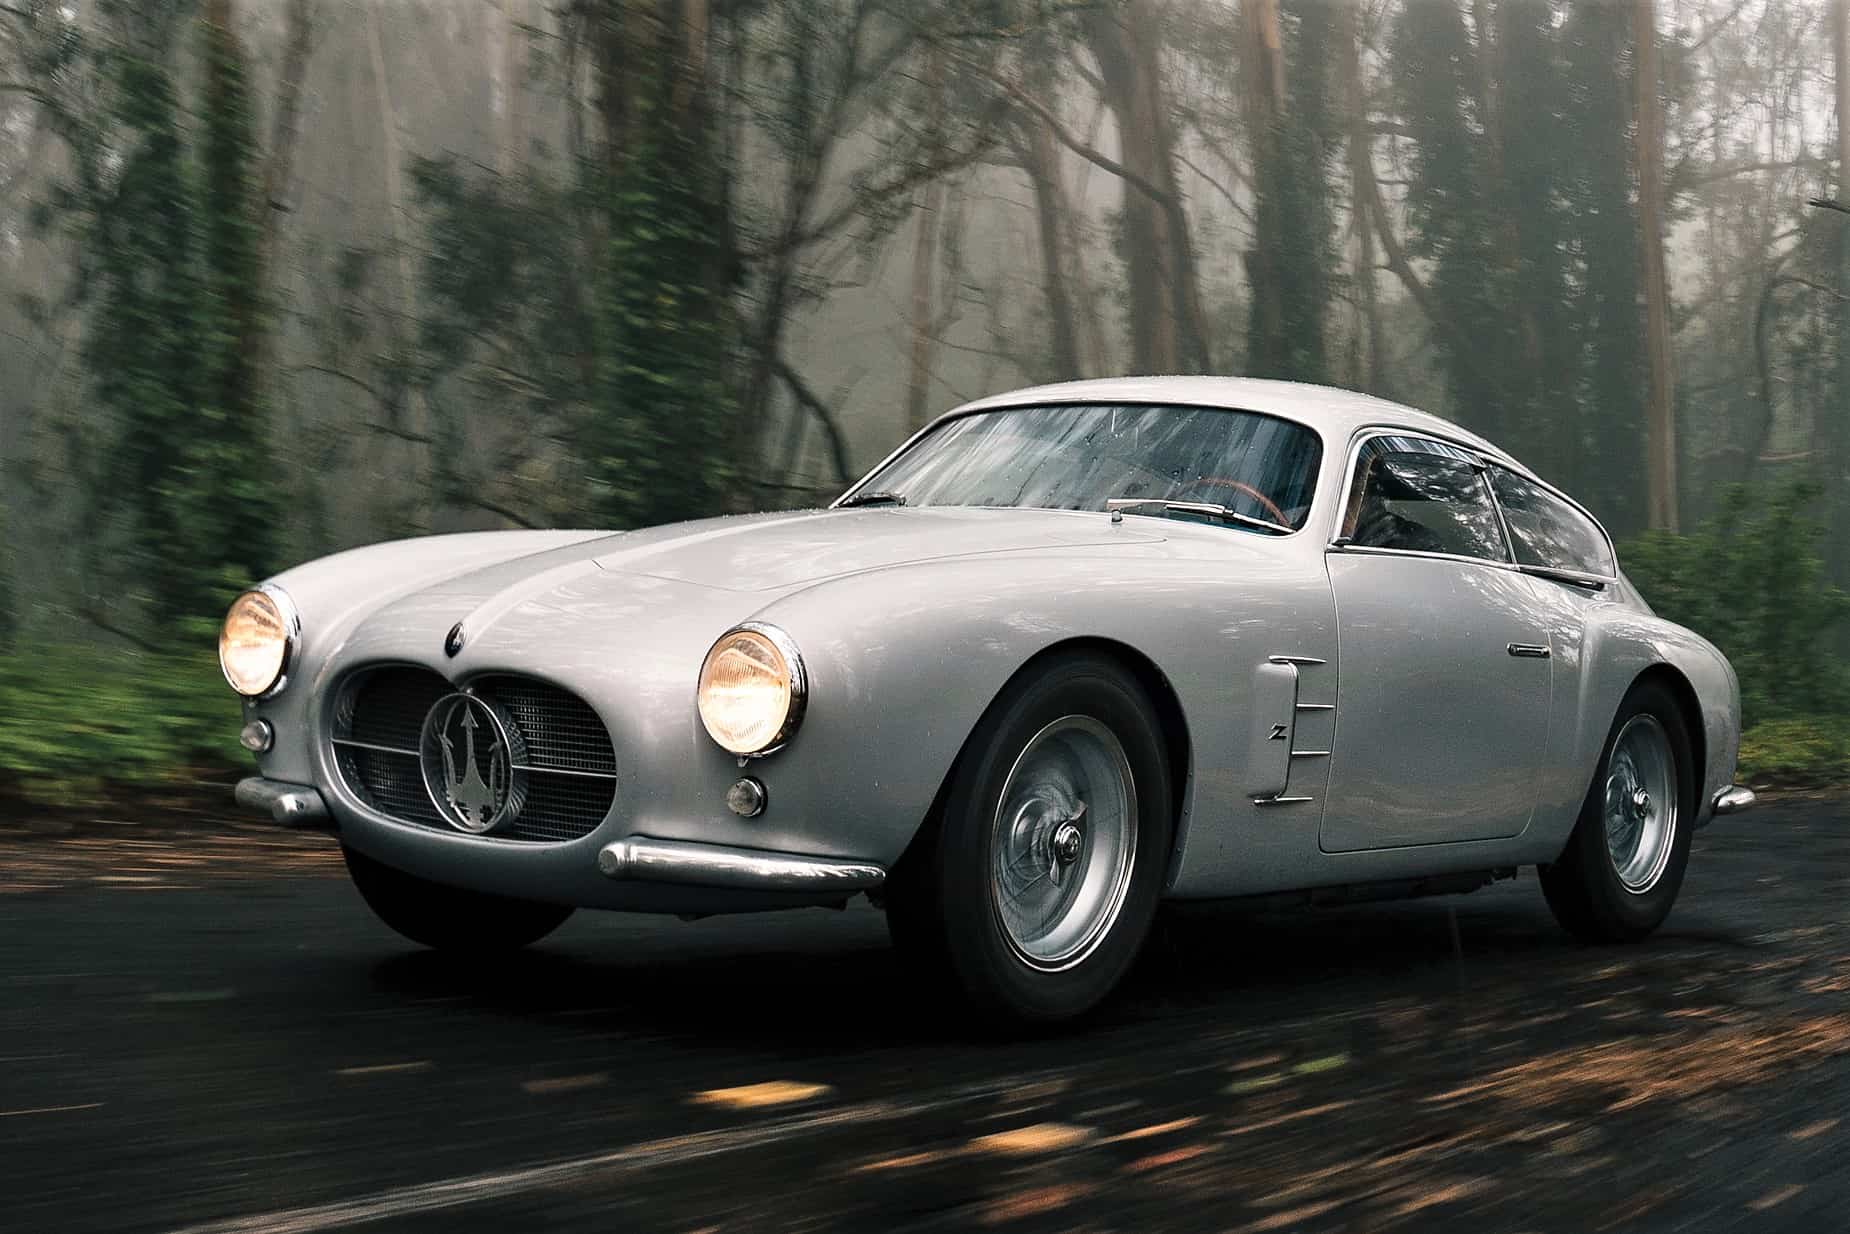 The Maserati wears an aerodynamic alloy body by Zagato | RM Sotheby's photos